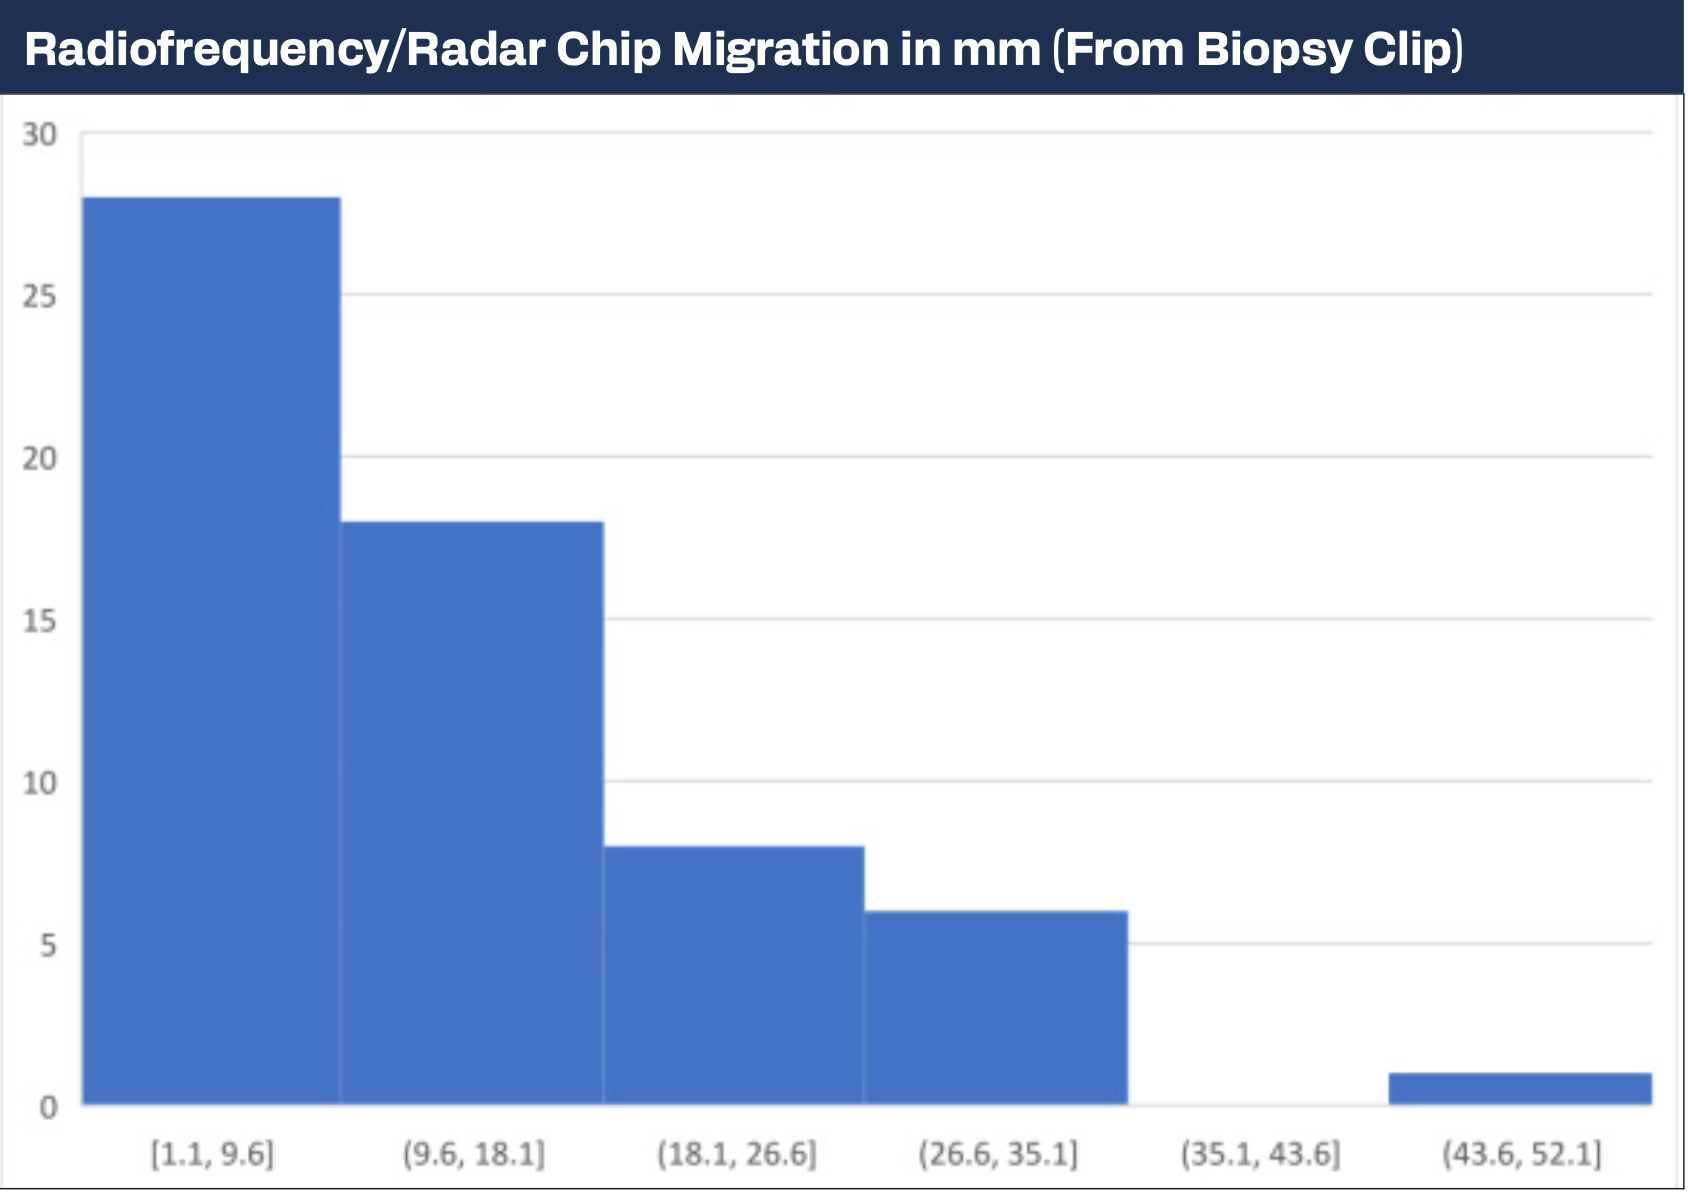 Radiofrequency/Radar Chip Migration in mm (From Biopsy Clip)